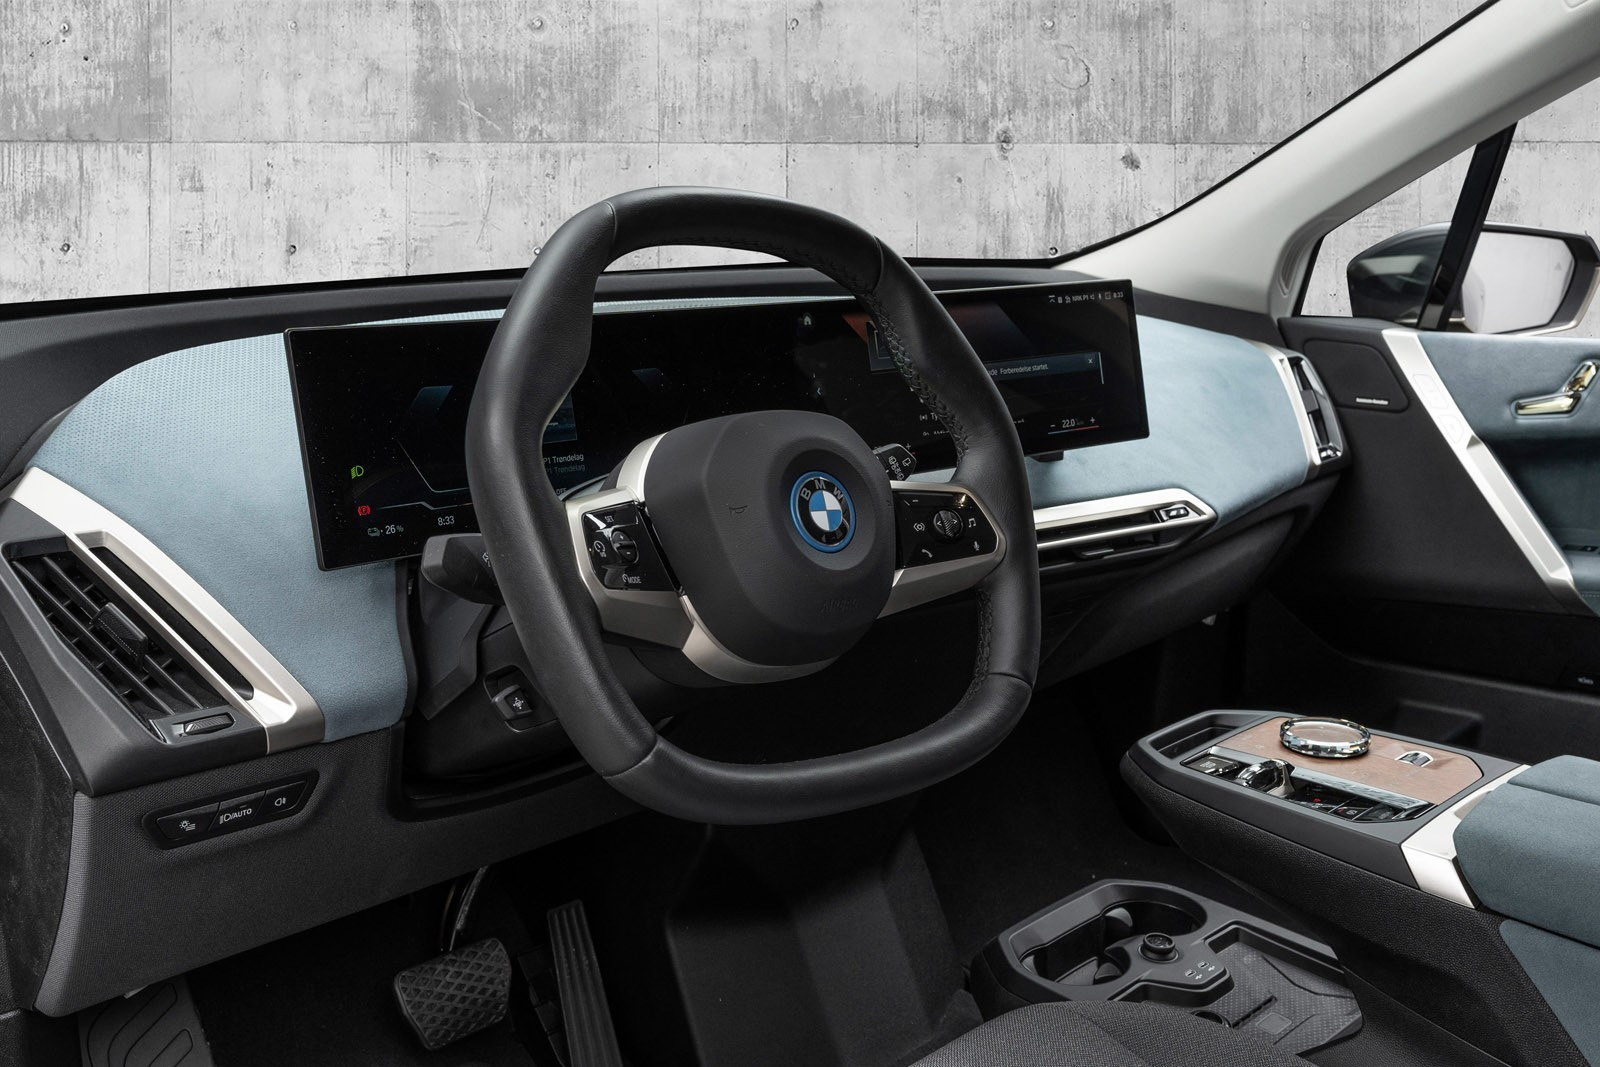 Lekre og pene detaljer i bilen og BMW Curved Display